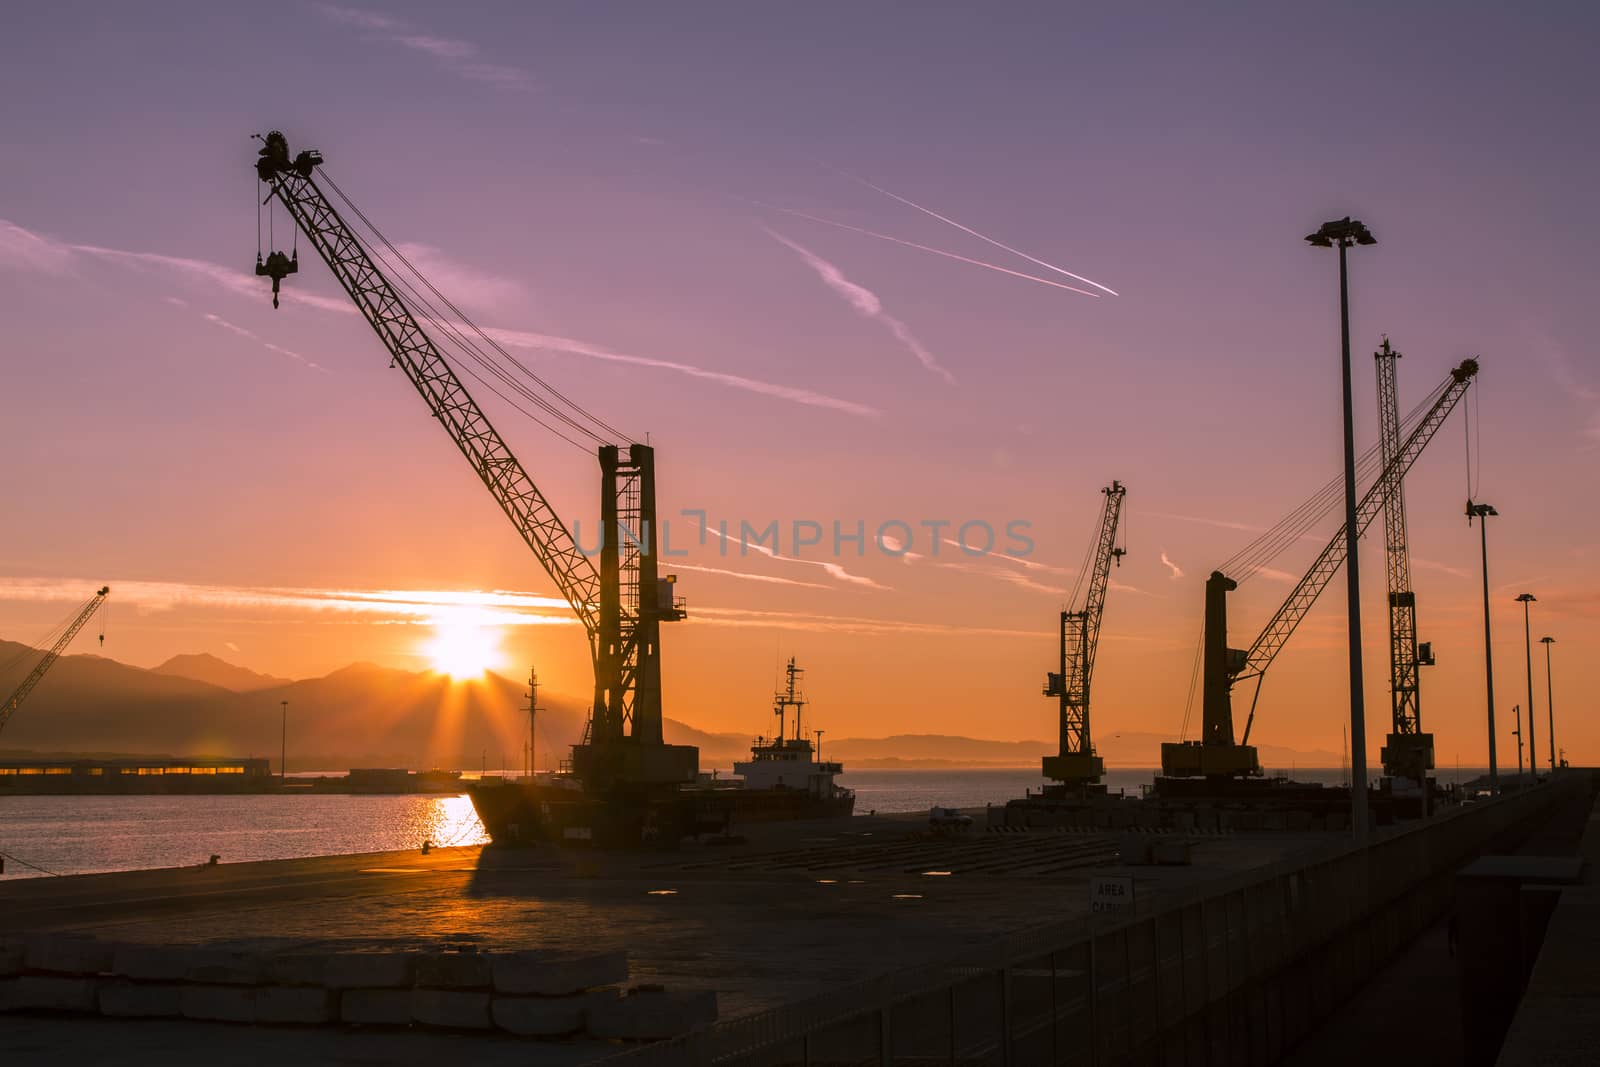 Cranes at dawn by nicobernieri